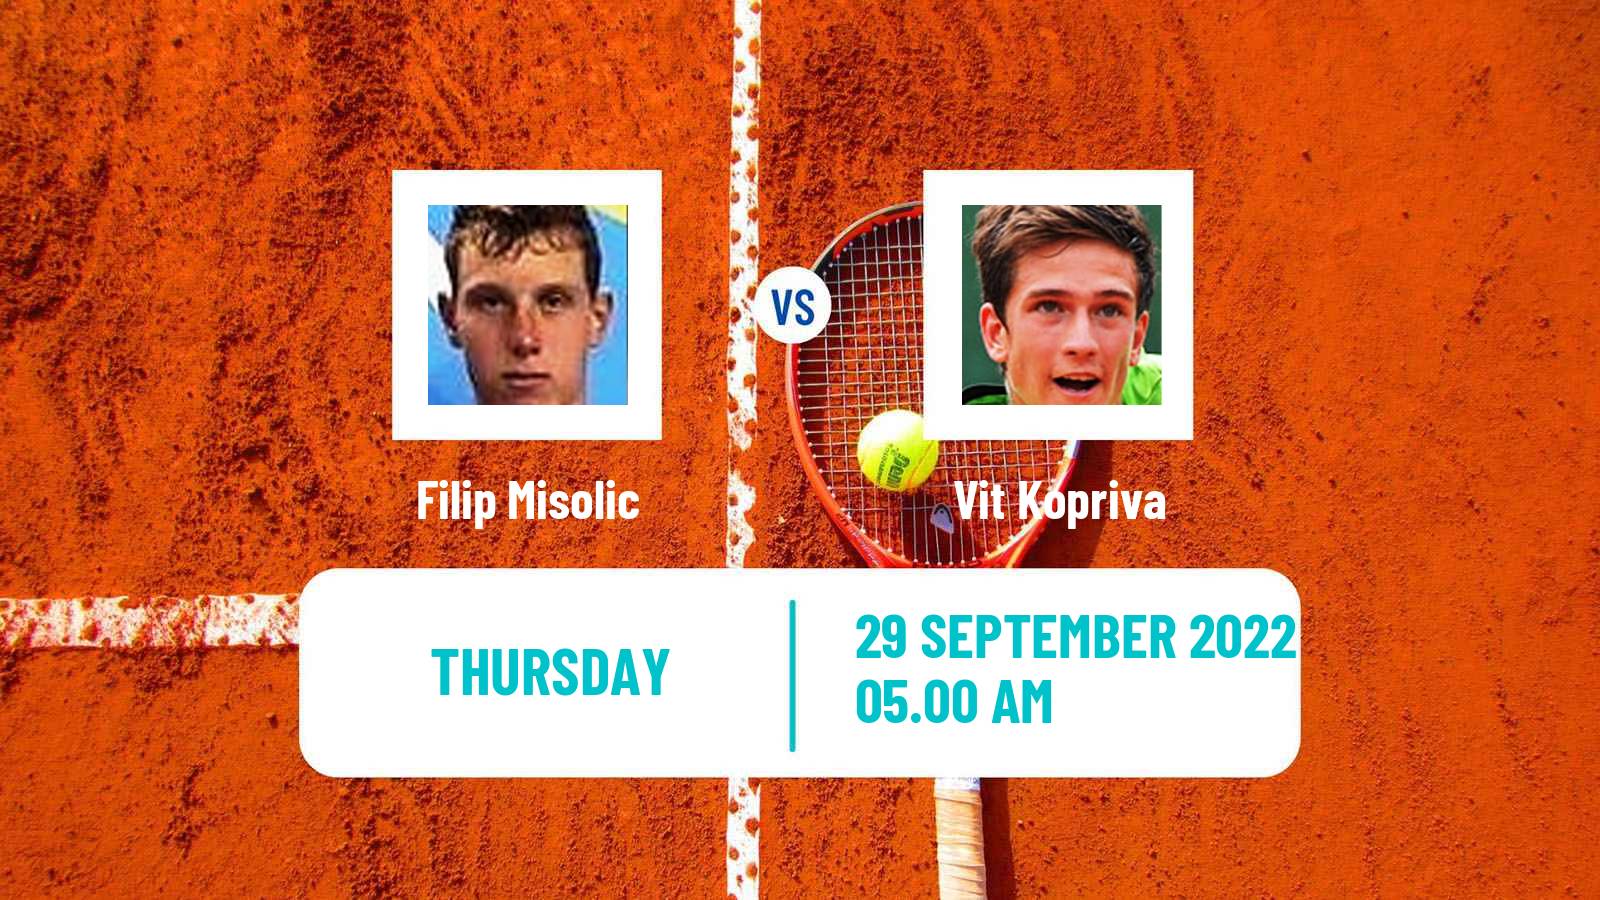 Tennis ATP Challenger Filip Misolic - Vit Kopriva